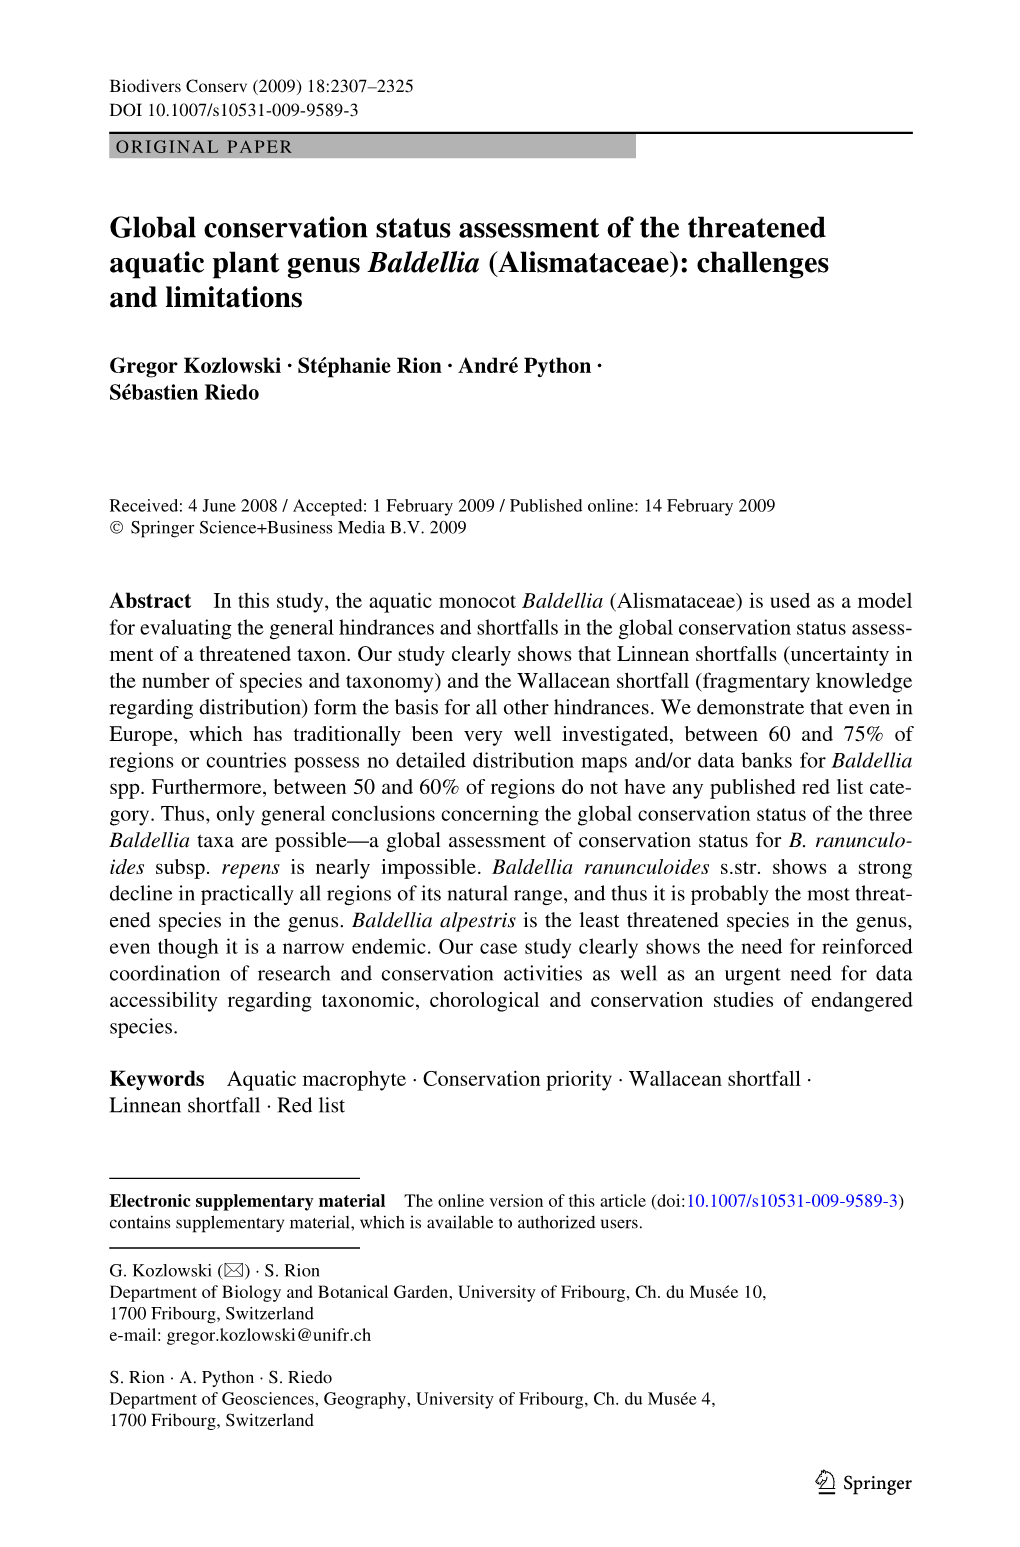 Global Conservation Status Assessment of the Threatened Aquatic Plant Genus Baldellia (Alismataceae): Challenges and Limitations